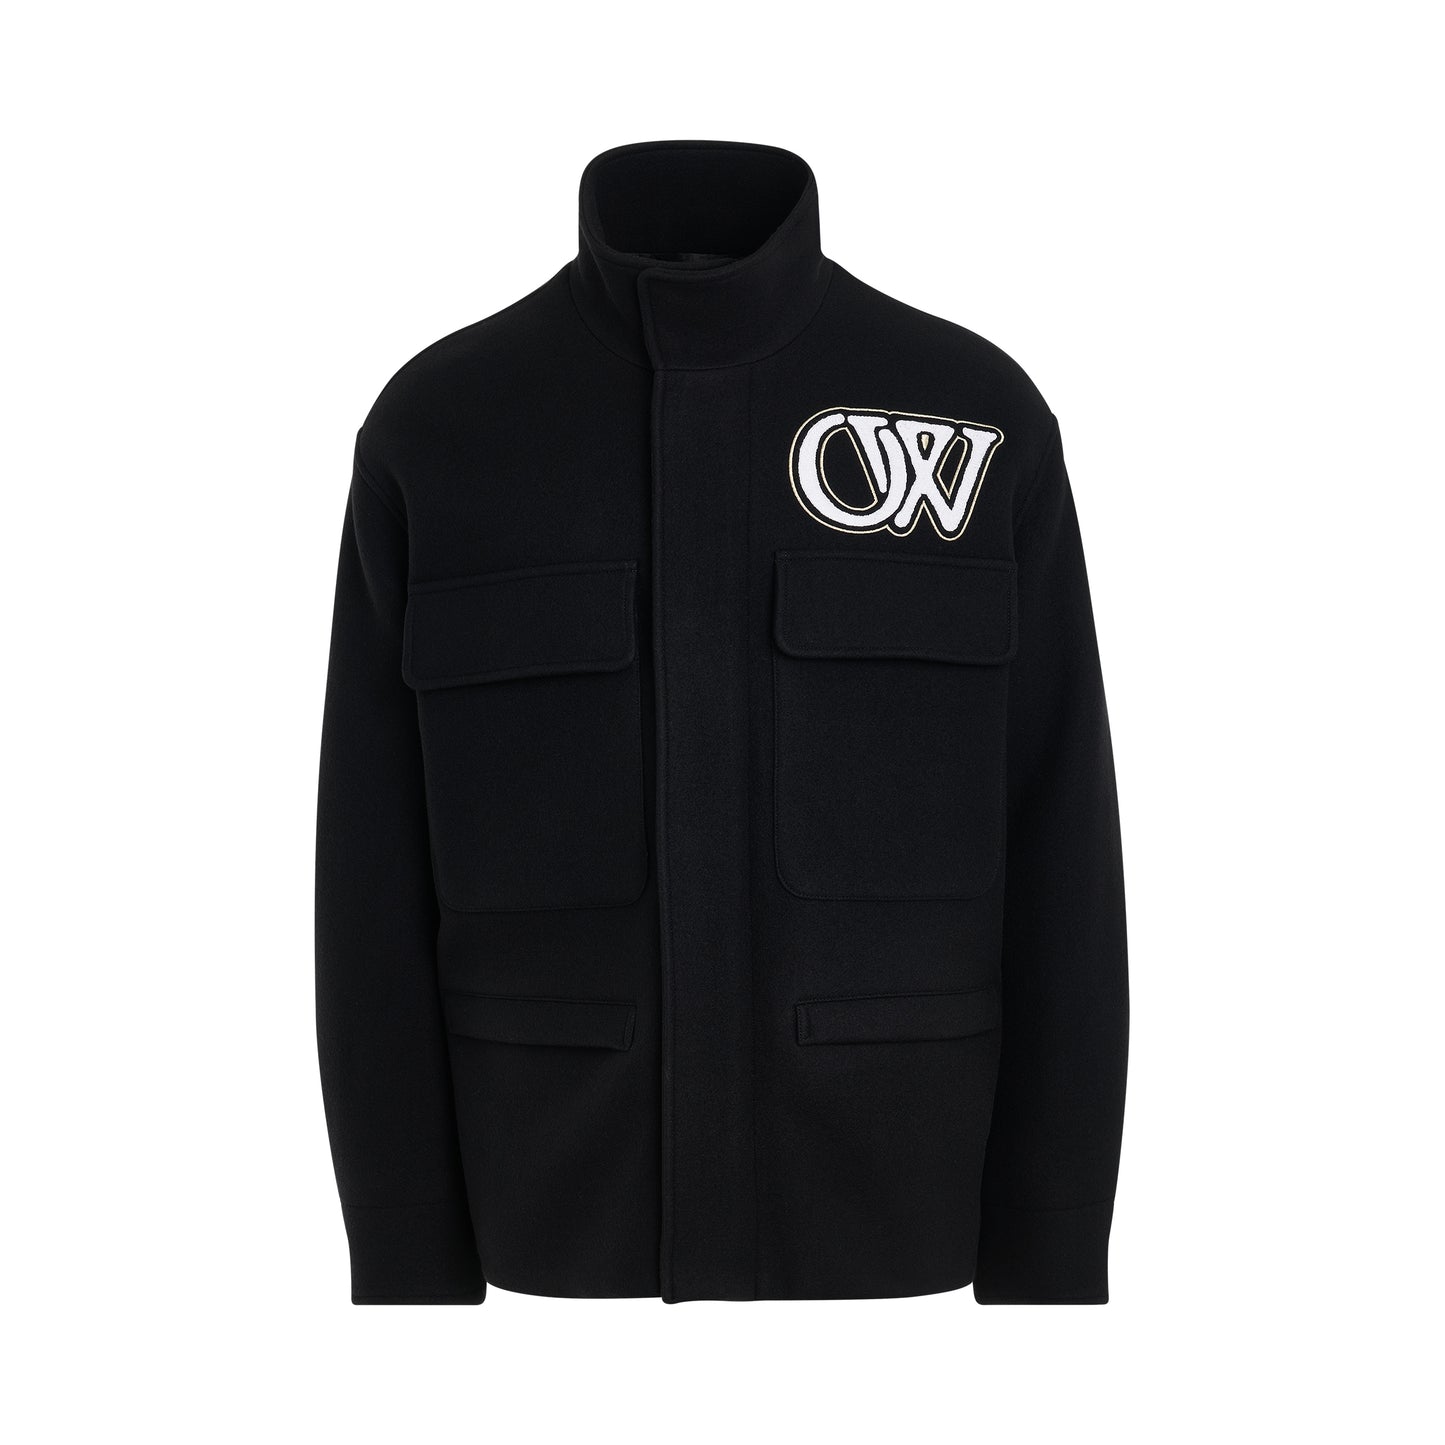 Wool Varsity Field Jacket in Black/White